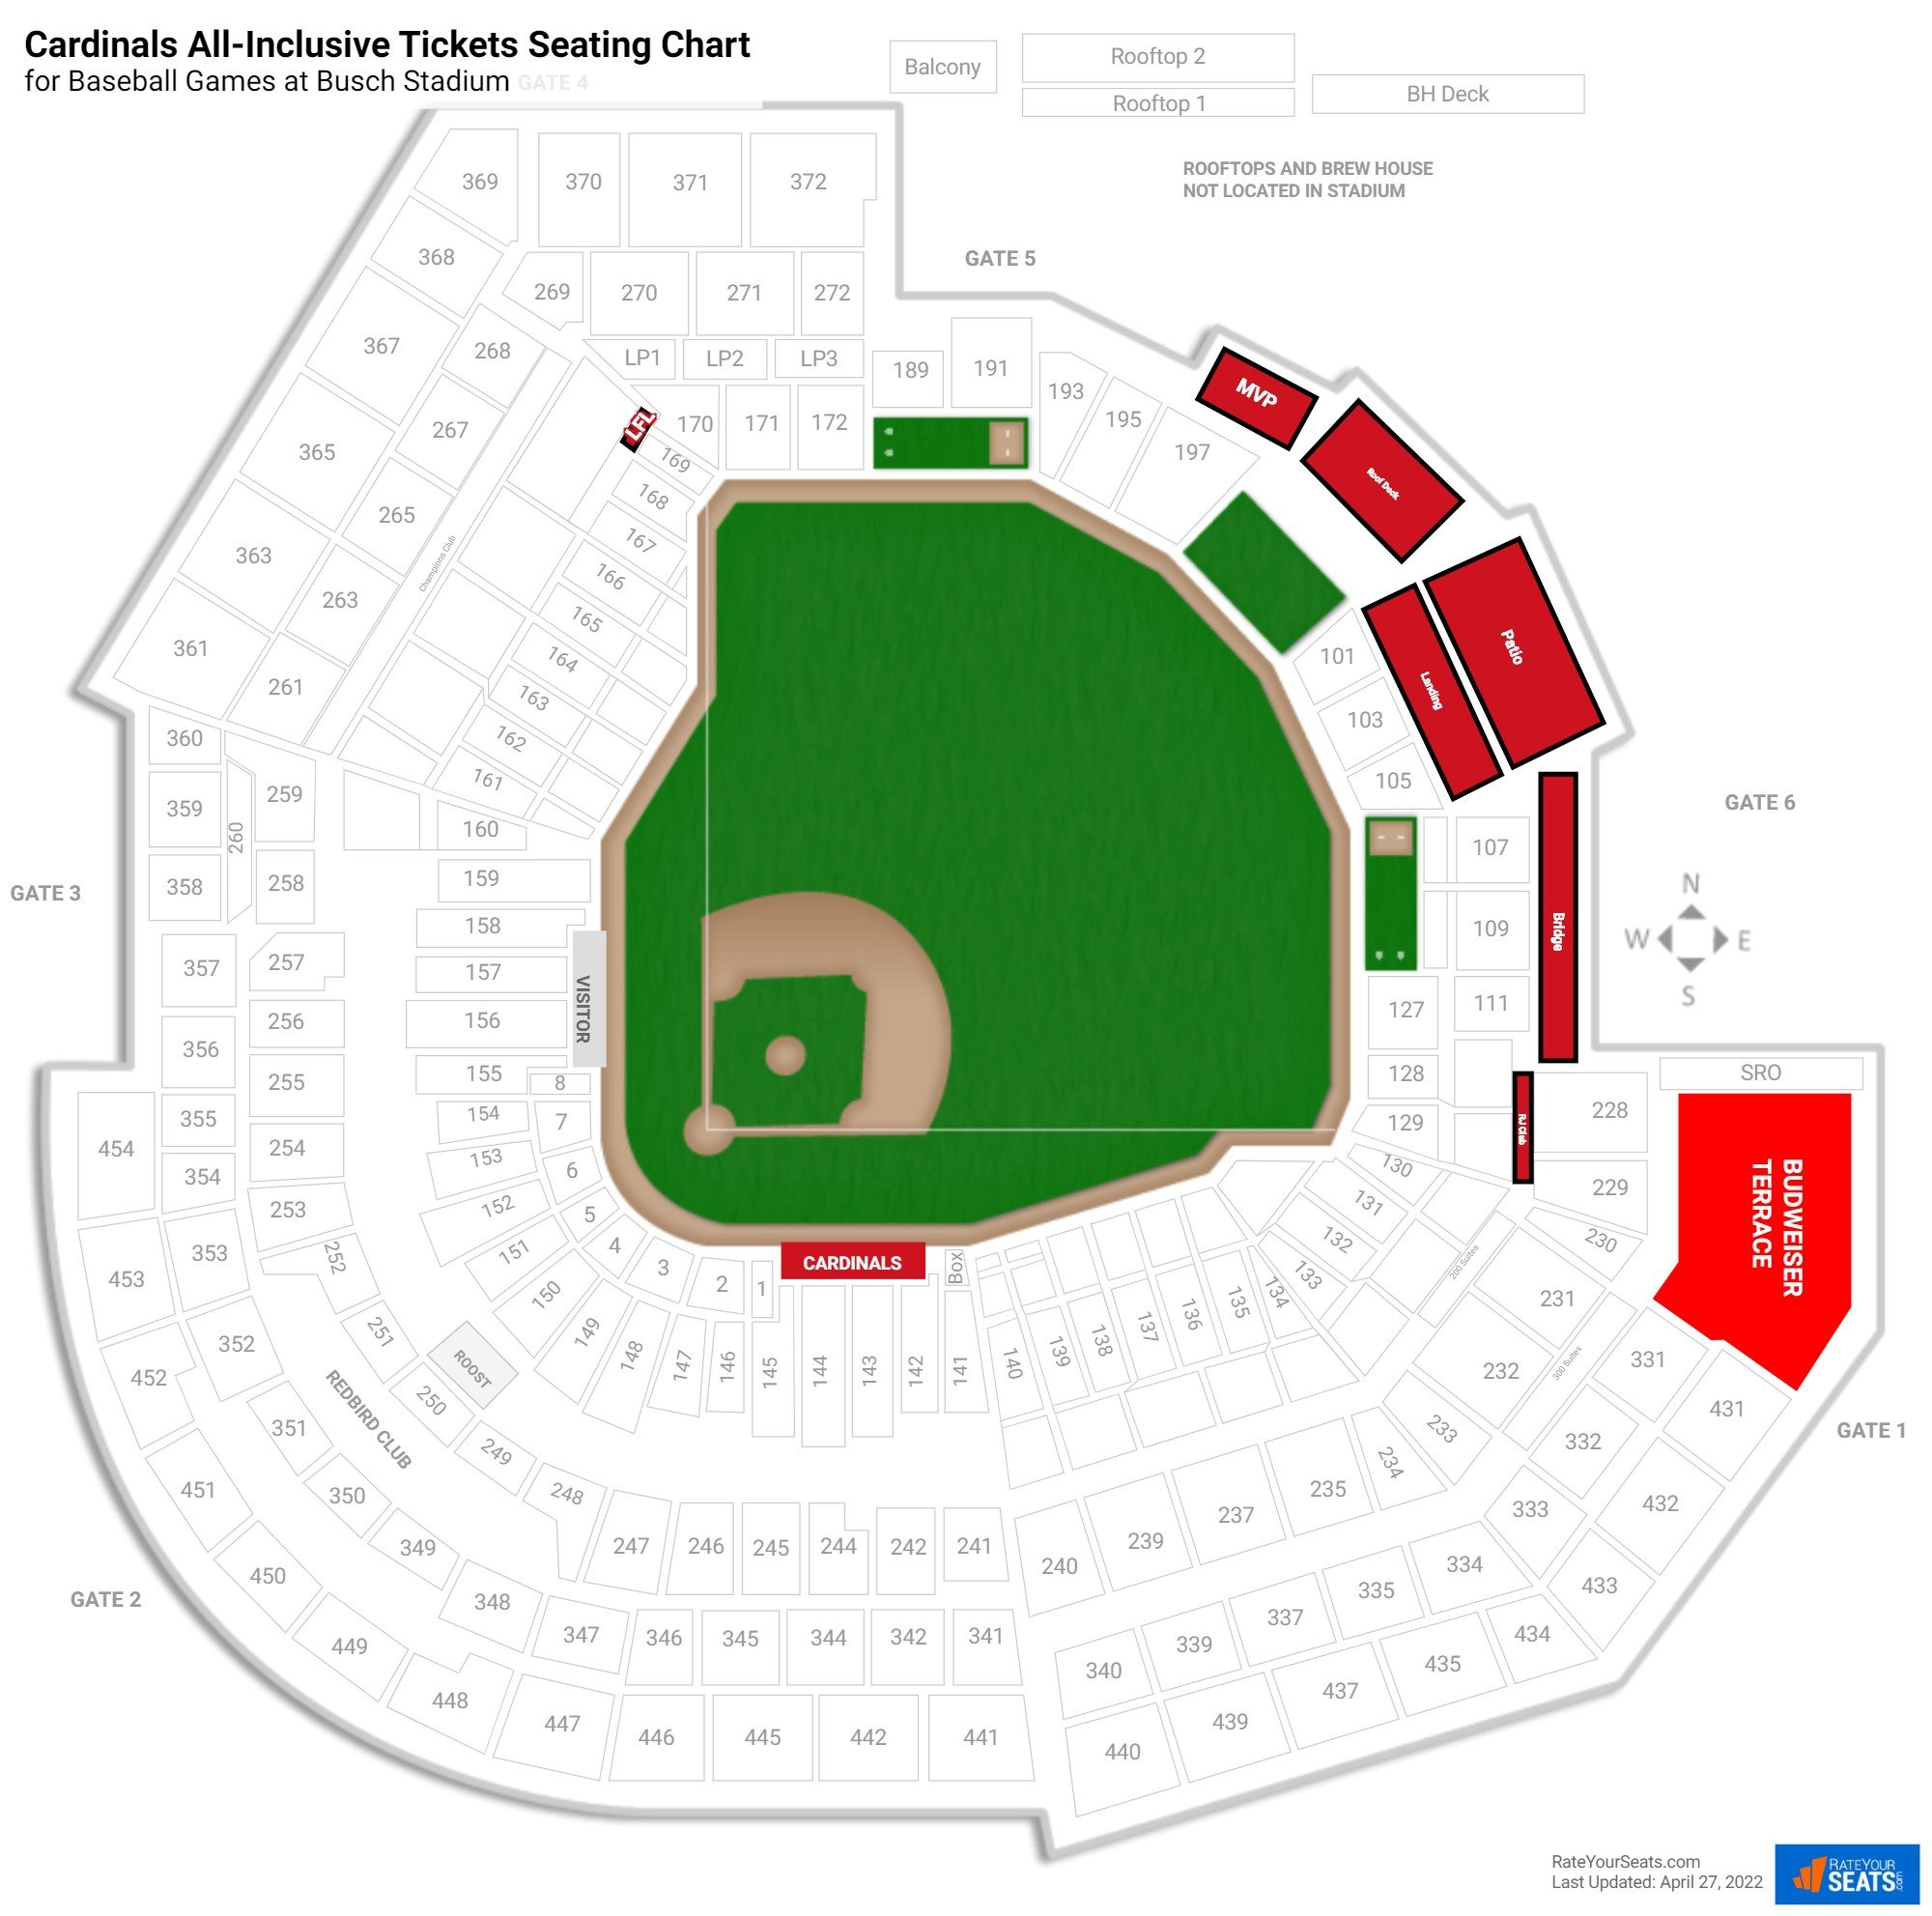 Baseball Cardinals All-Inclusive Tickets Seating Chart at Busch Stadium